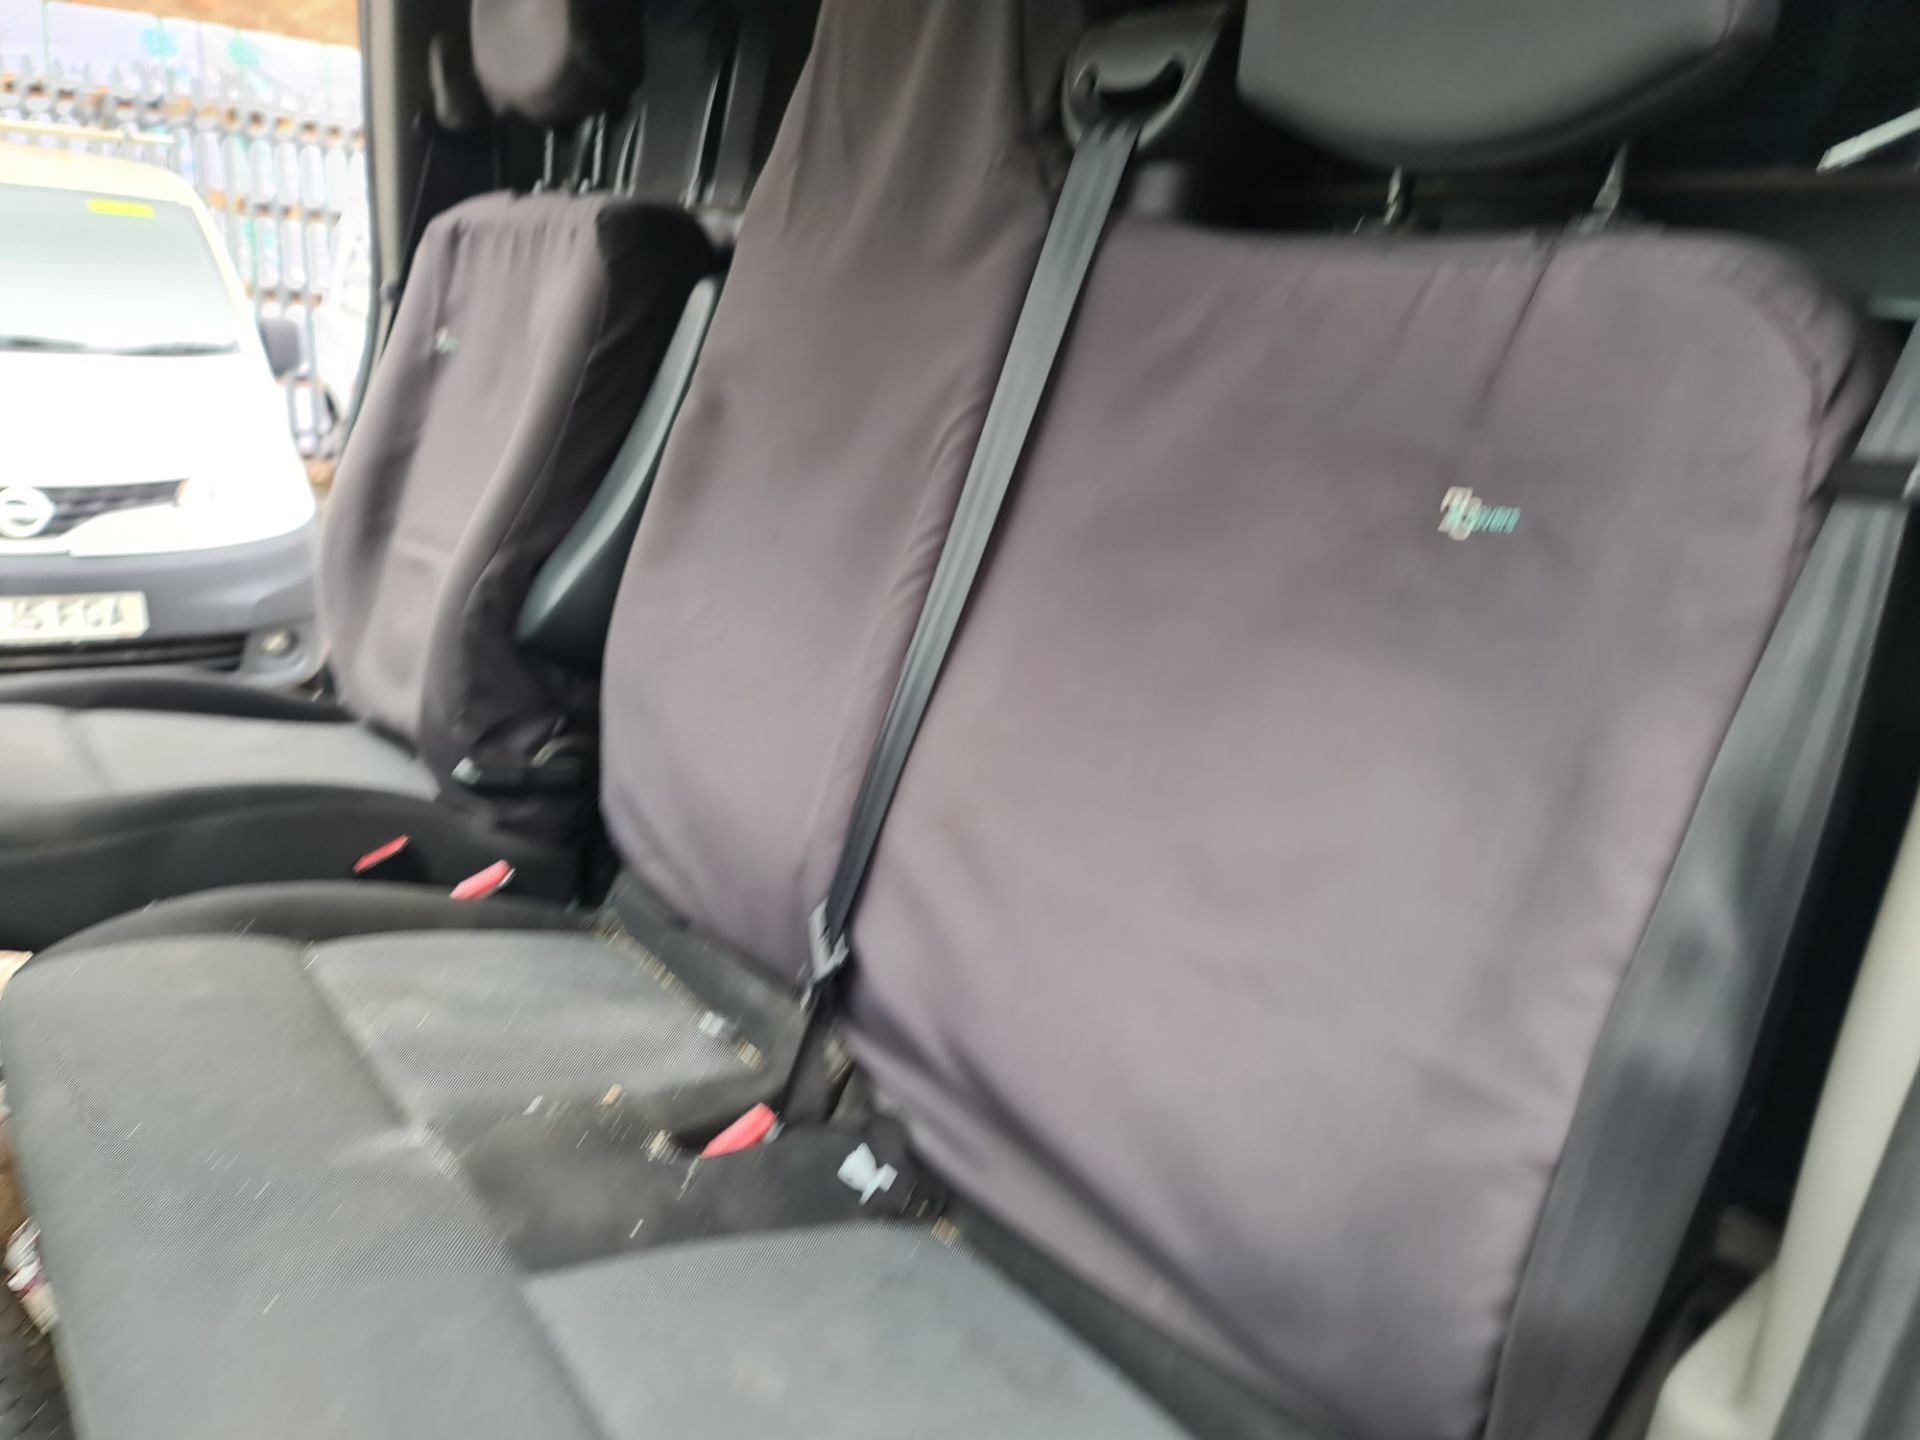 2015 Nissan NV400 SE DCI panel van - Image 56 of 74